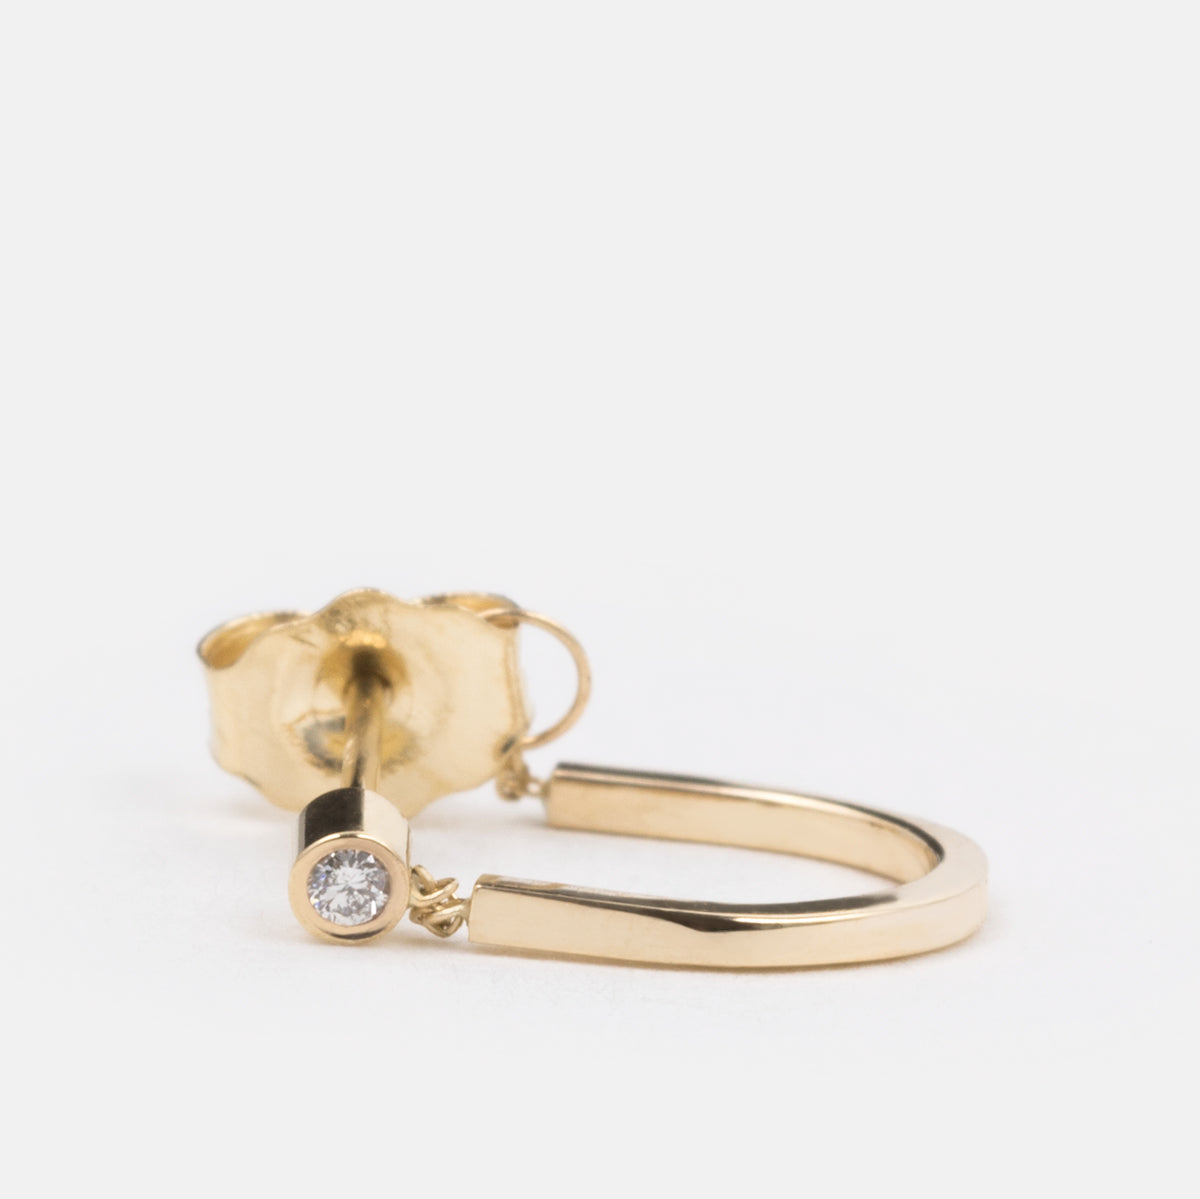 Mini Lona Designer Hug Earring in 14k Gold set with White Diamonds By SHW Fine Jewelry NYC